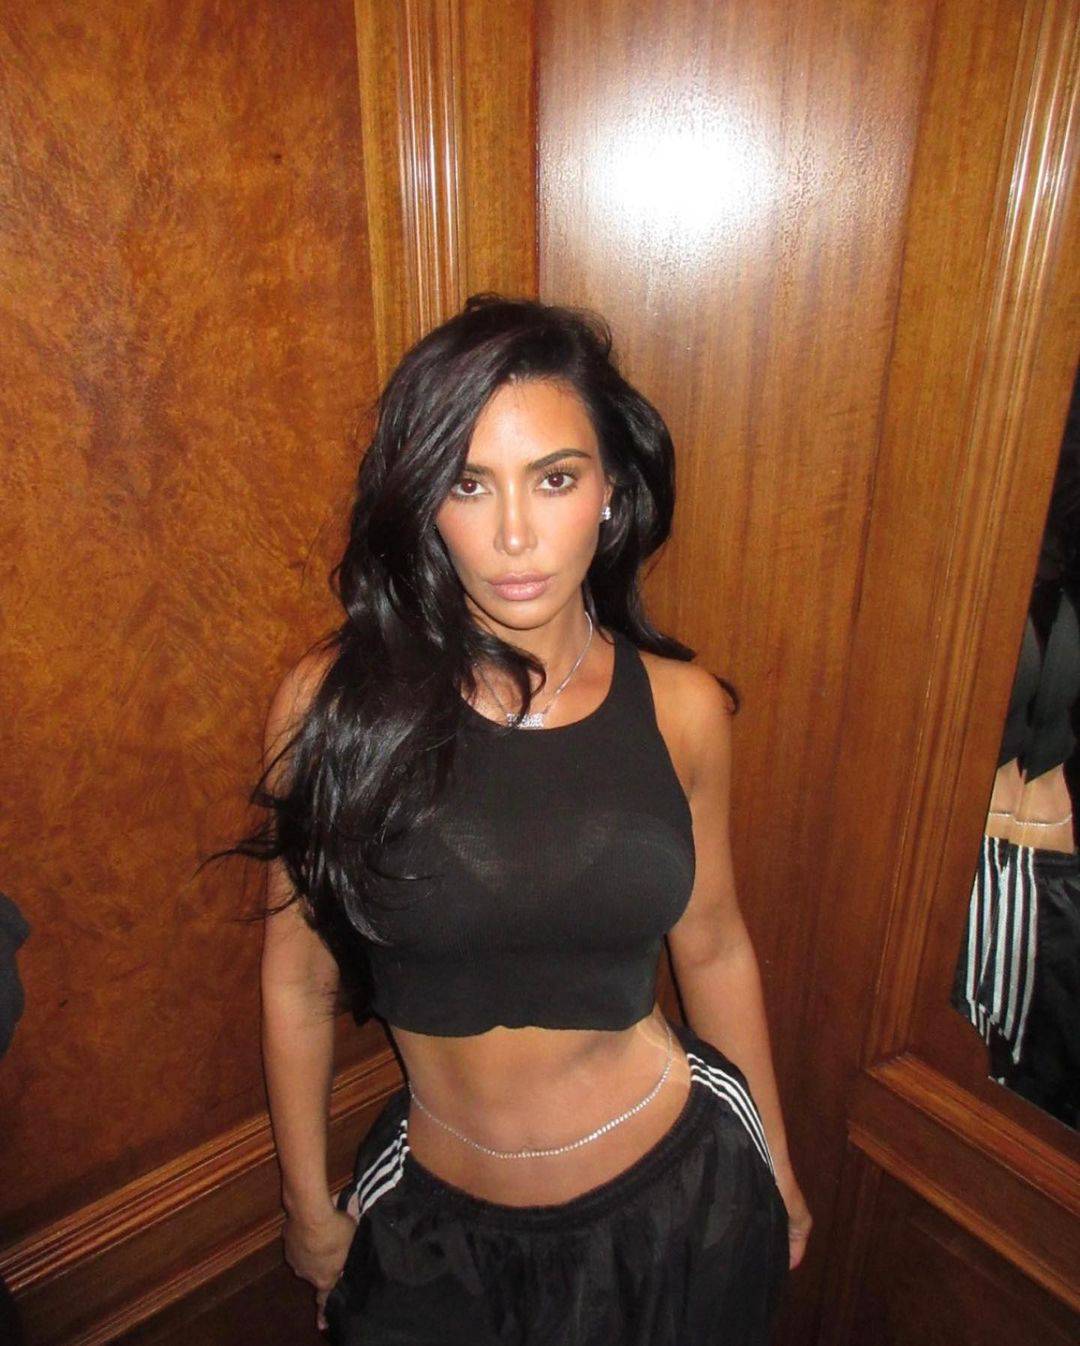 Kim Kardashian ima novog dečka? 'Provode puno vremena skupa, ali ona je još uvijek solo'